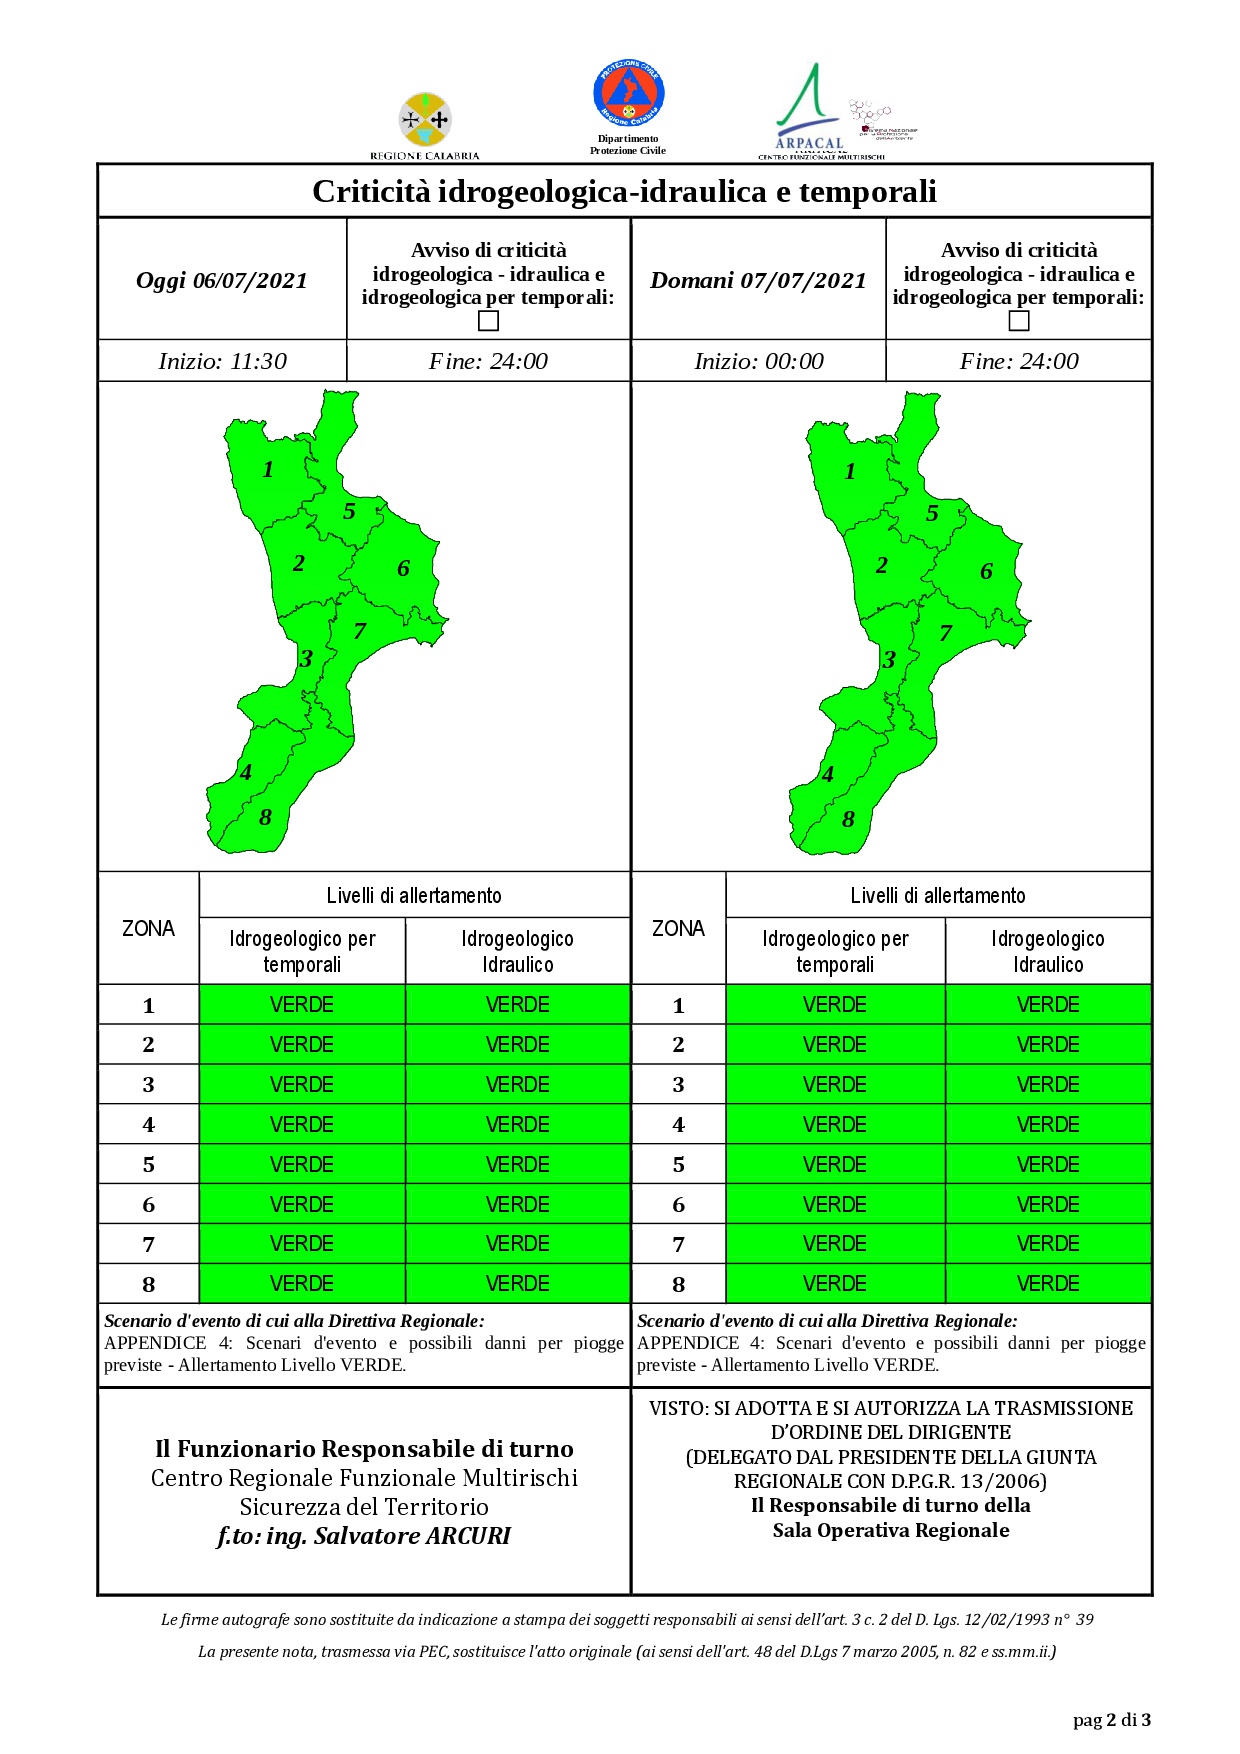 Criticità idrogeologica-idraulica e temporali in Calabria 06-07-2021